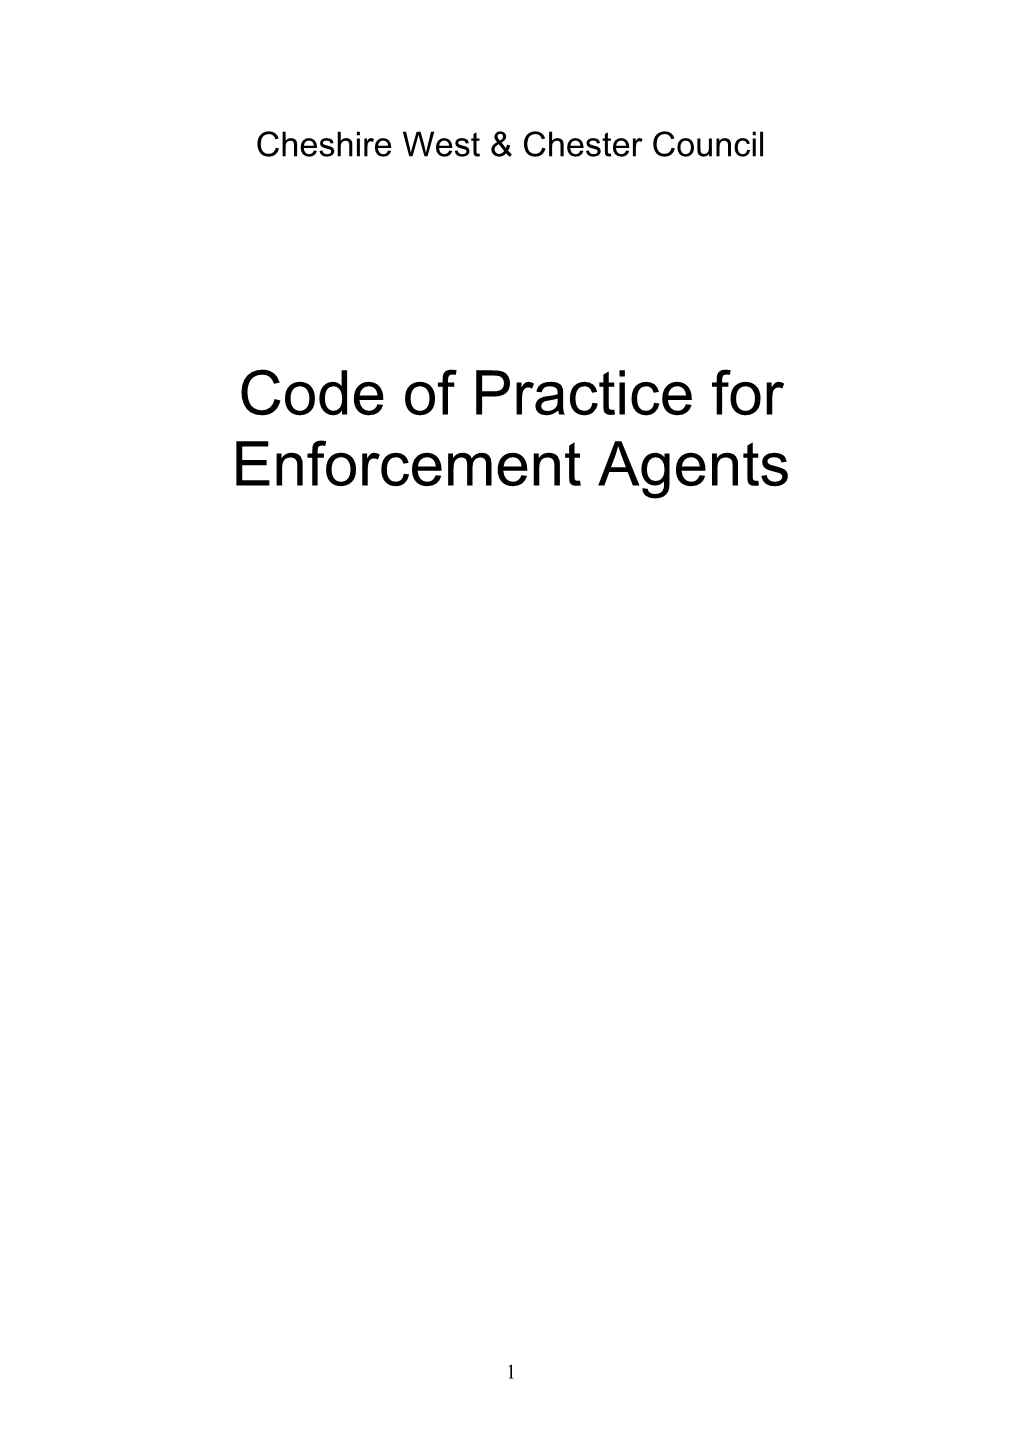 Code of Practice for Bailiffs